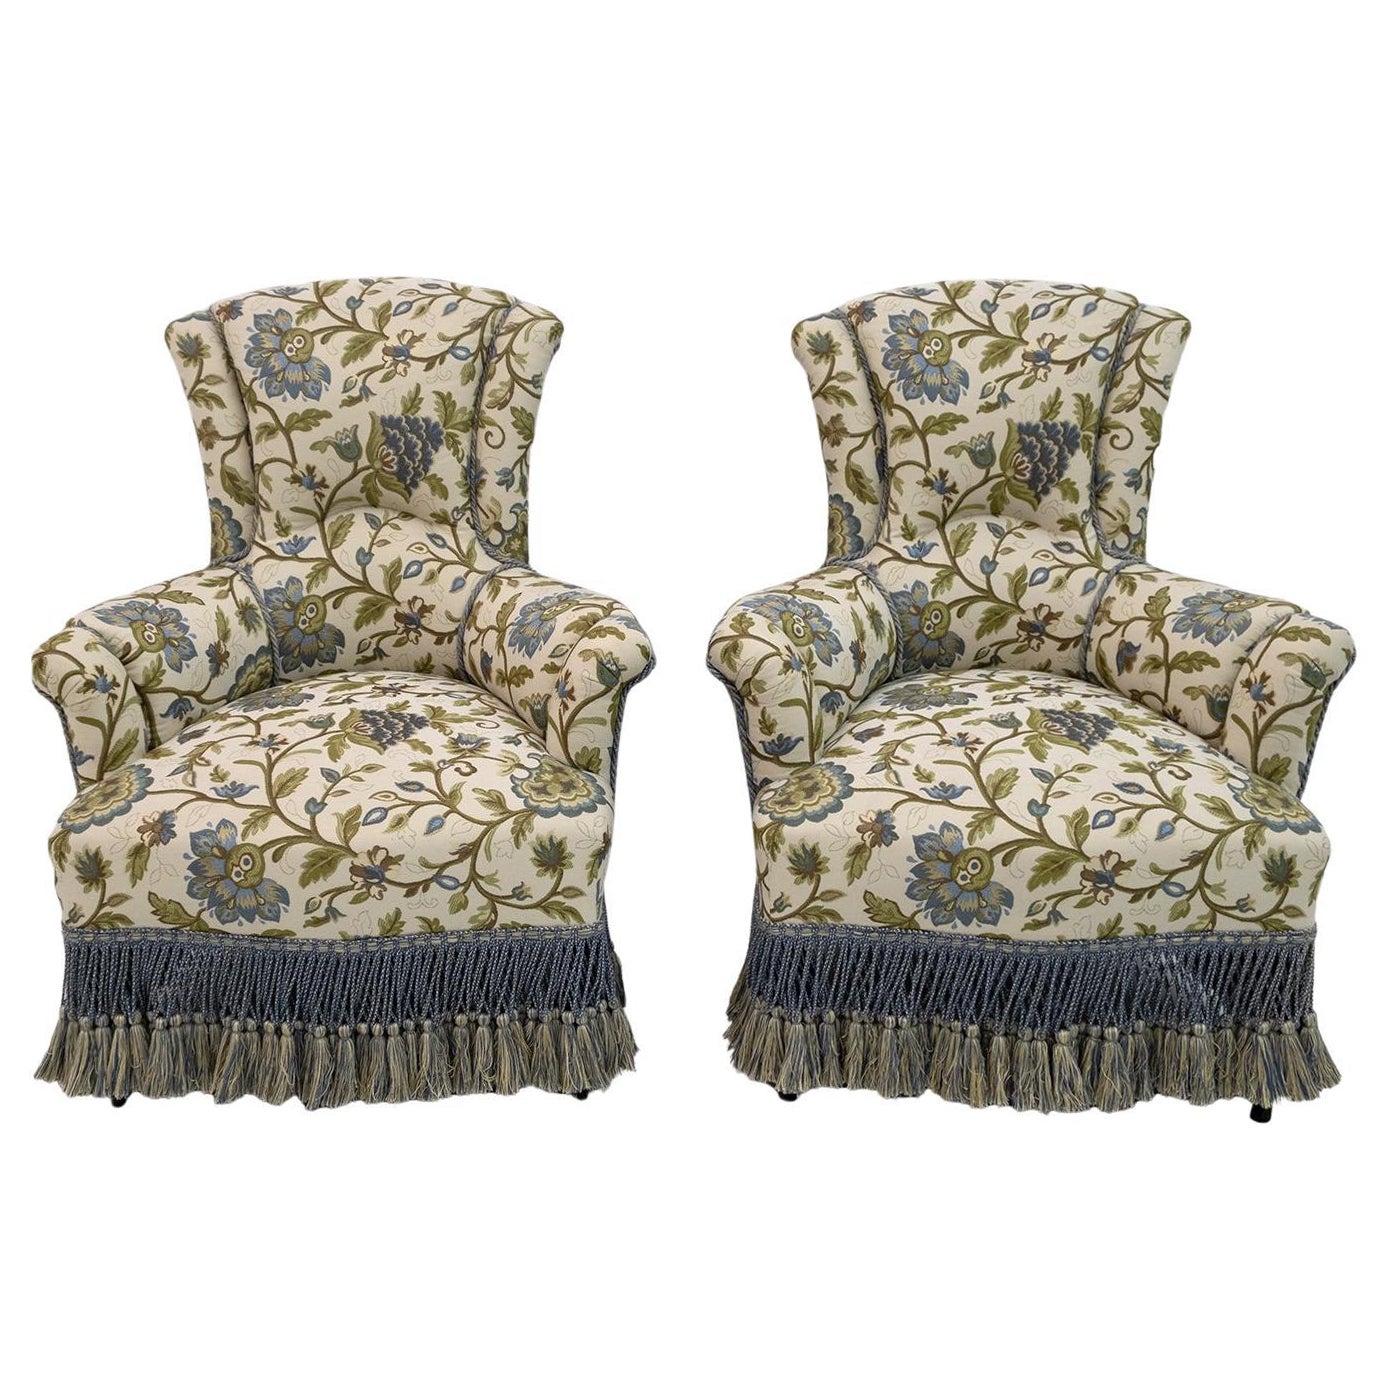 Ein Paar seltene Napoleon III.-Brokat-Sessel aus dem 19. Jahrhundert im Angebot